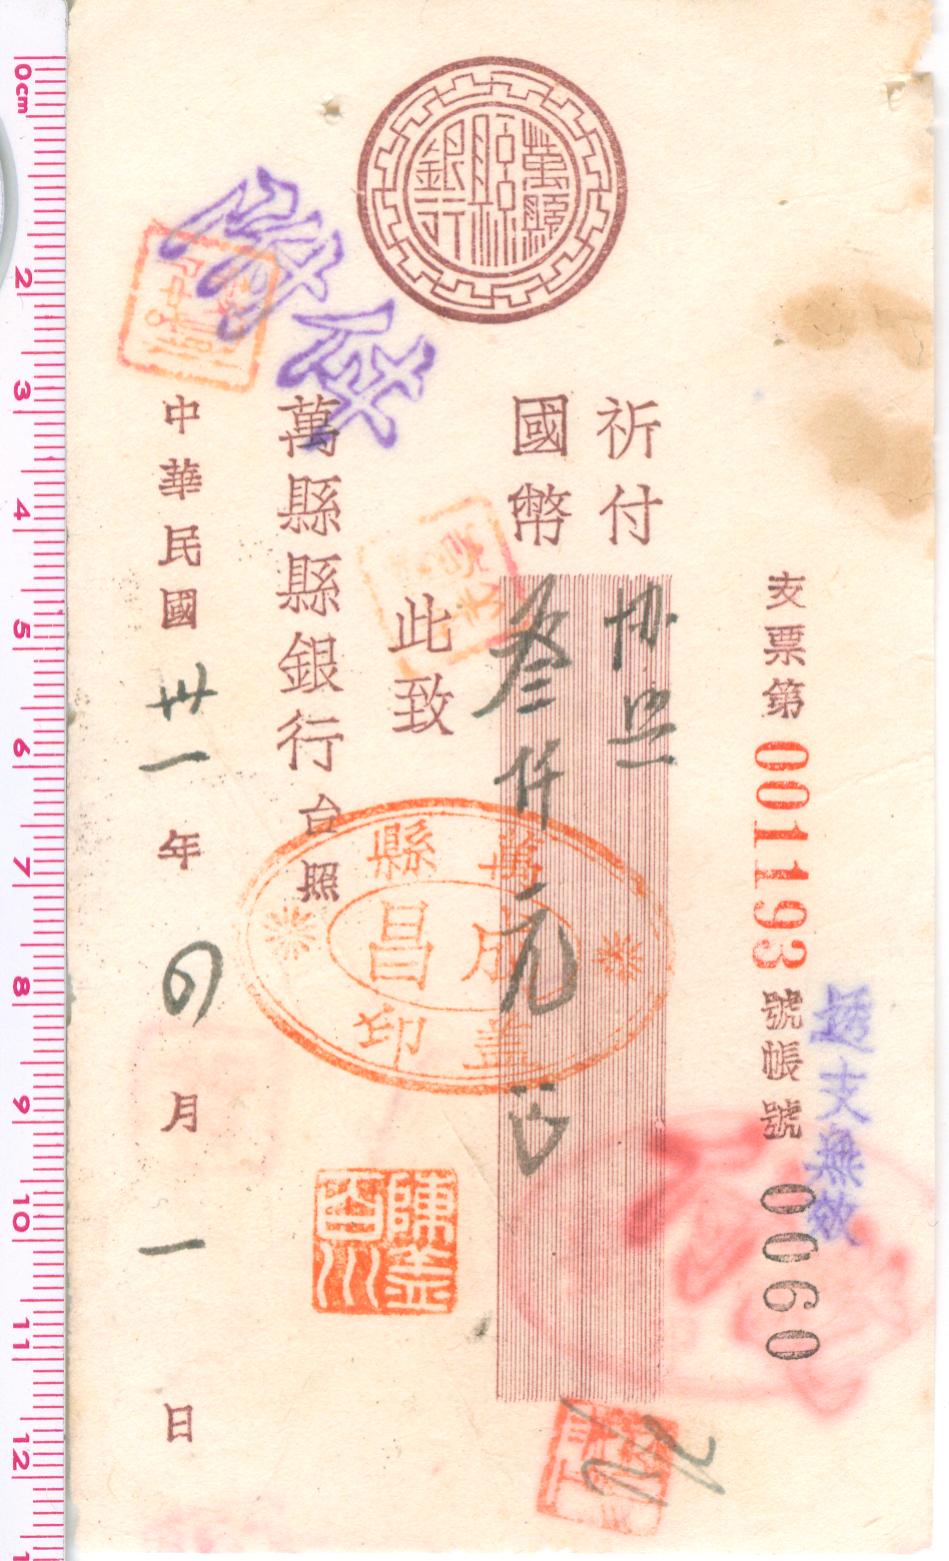 D2232, Check of Wan County Bank, China Szechuen Province, 1942